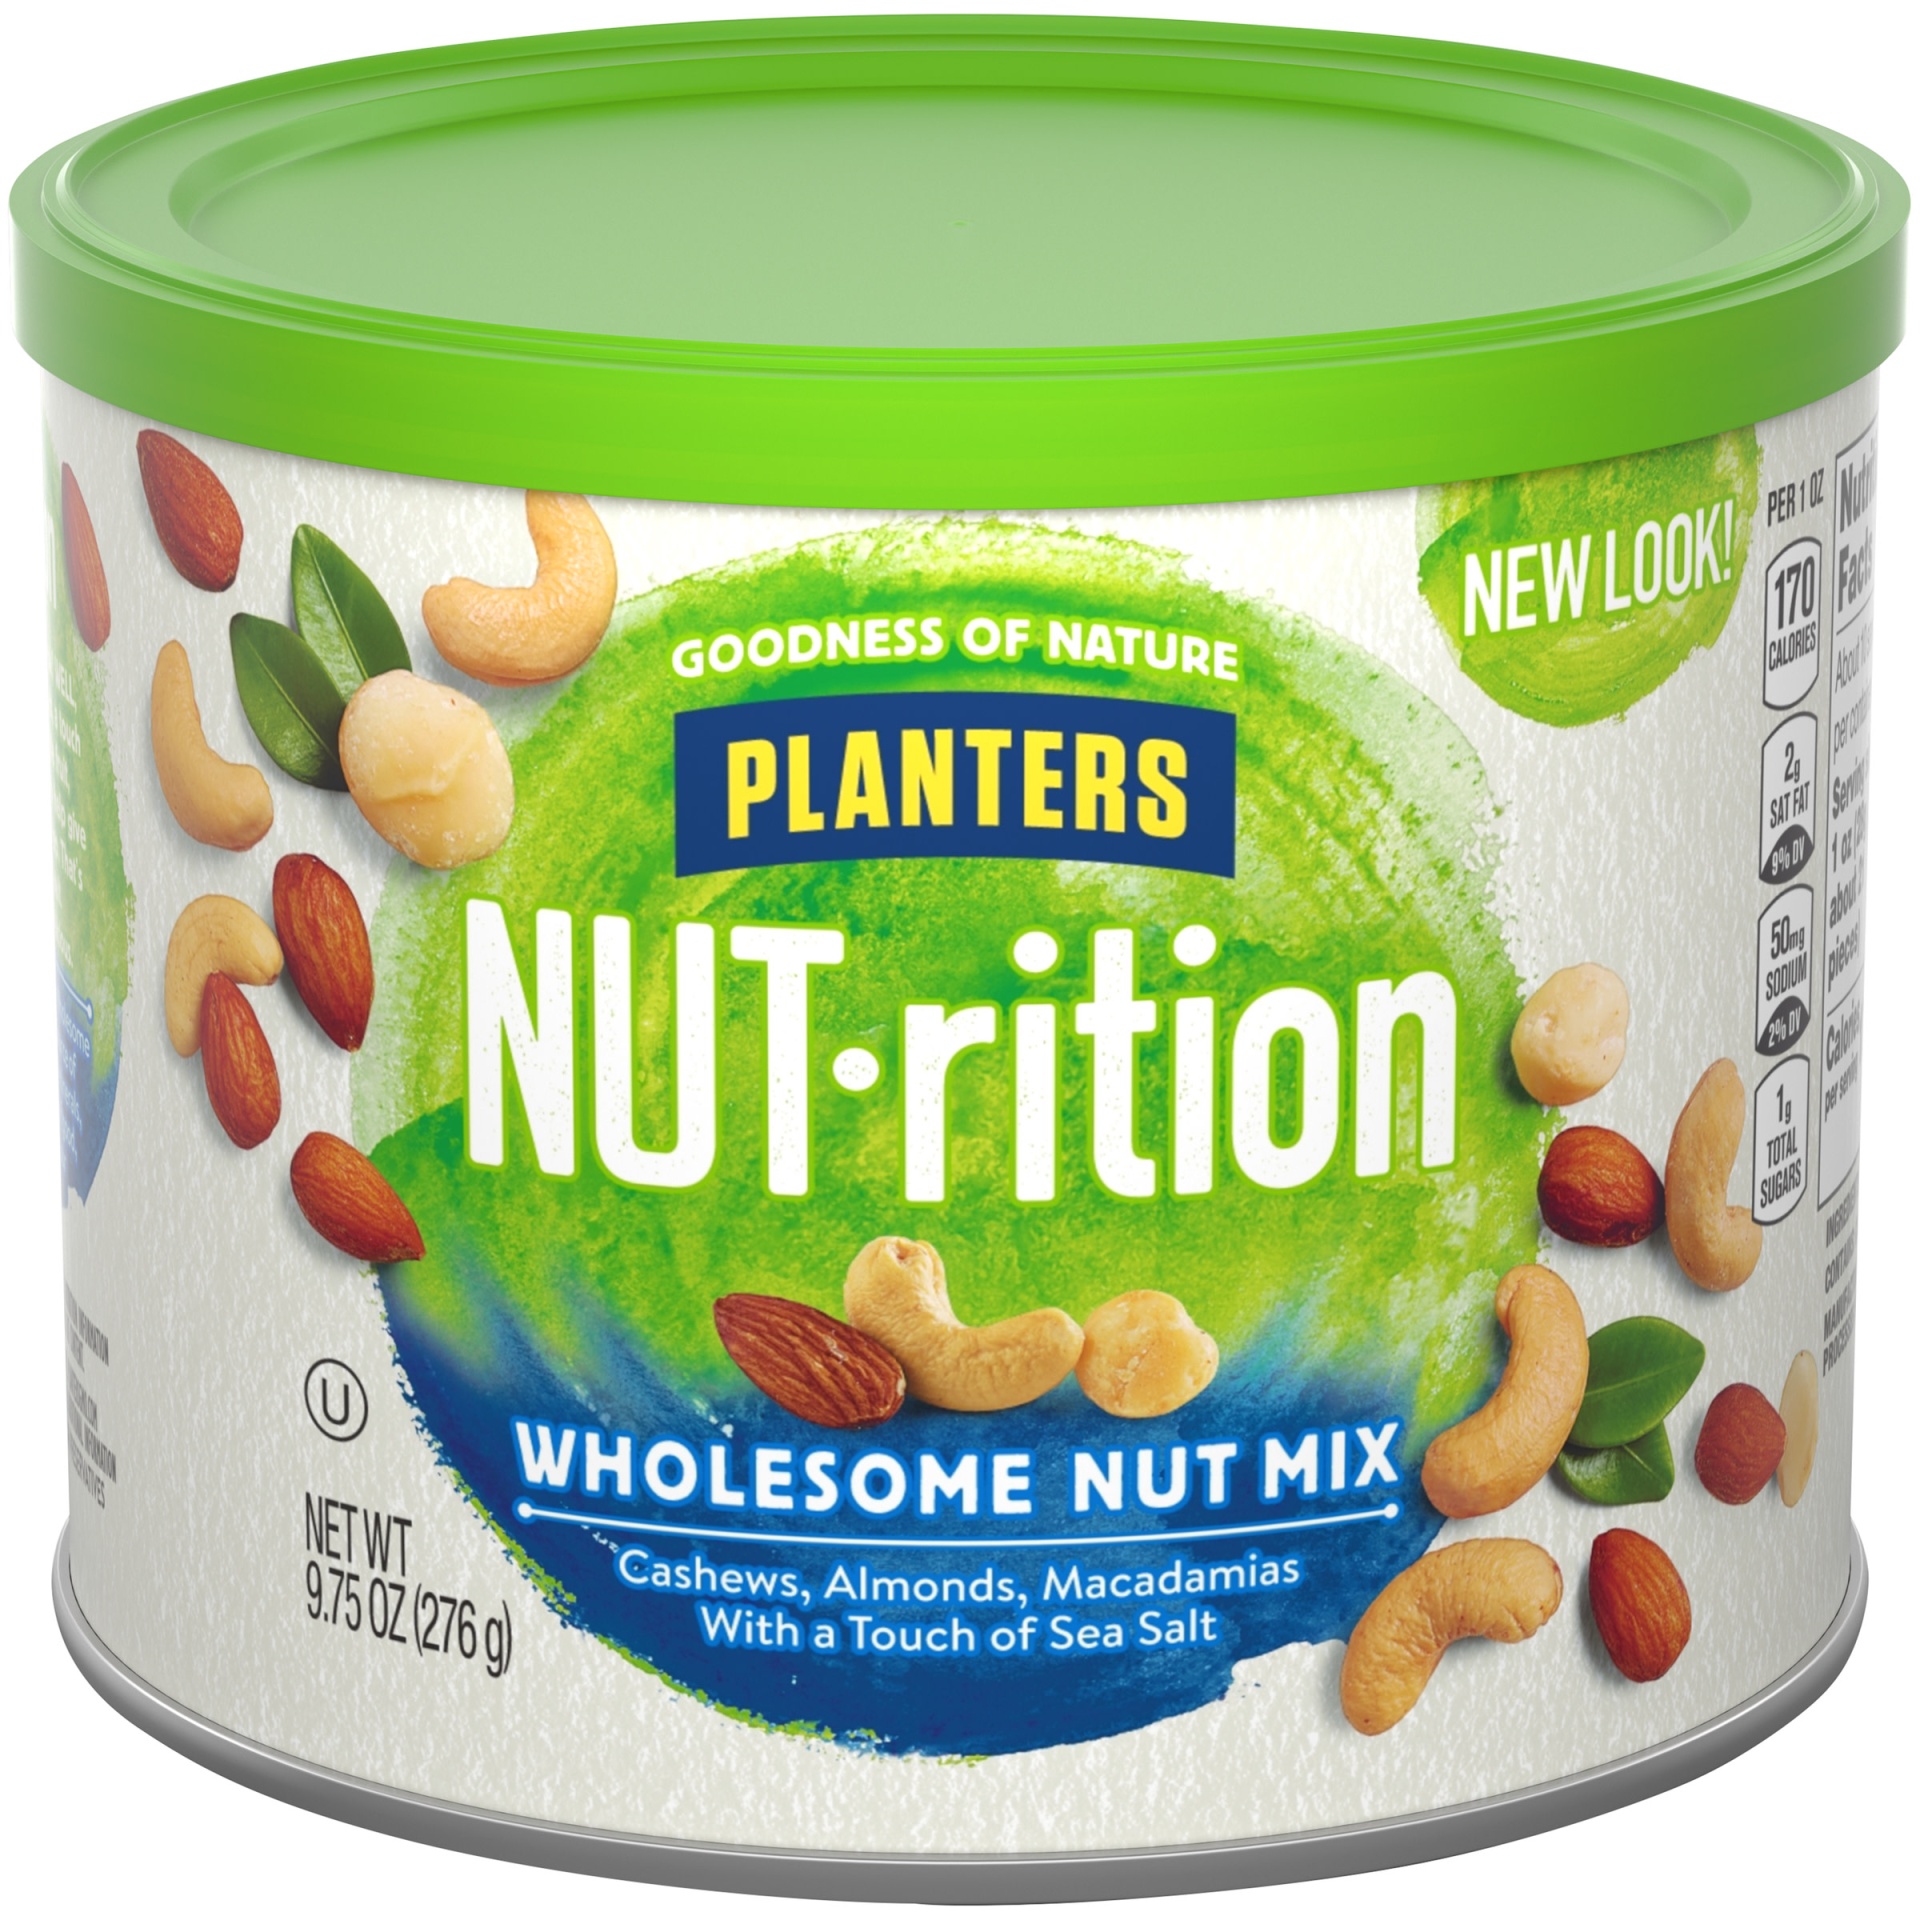 slide 1 of 2, NUT-rition Wholesome Nut Mix with Cashews, Almonds, Macadamias, & Sea Salt, 9.75 oz